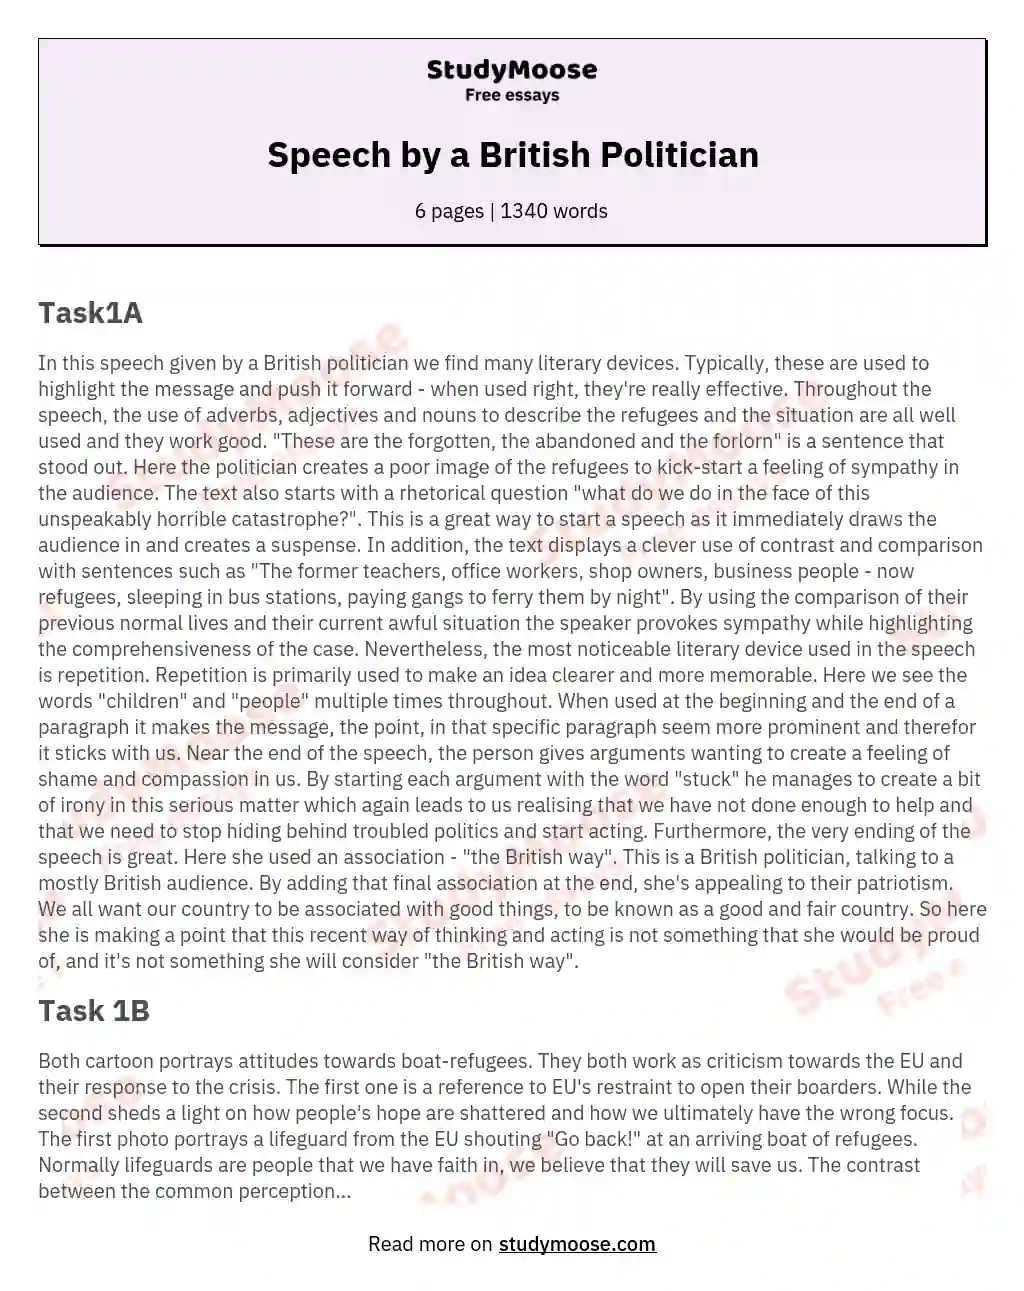 Speech by a British Politician essay